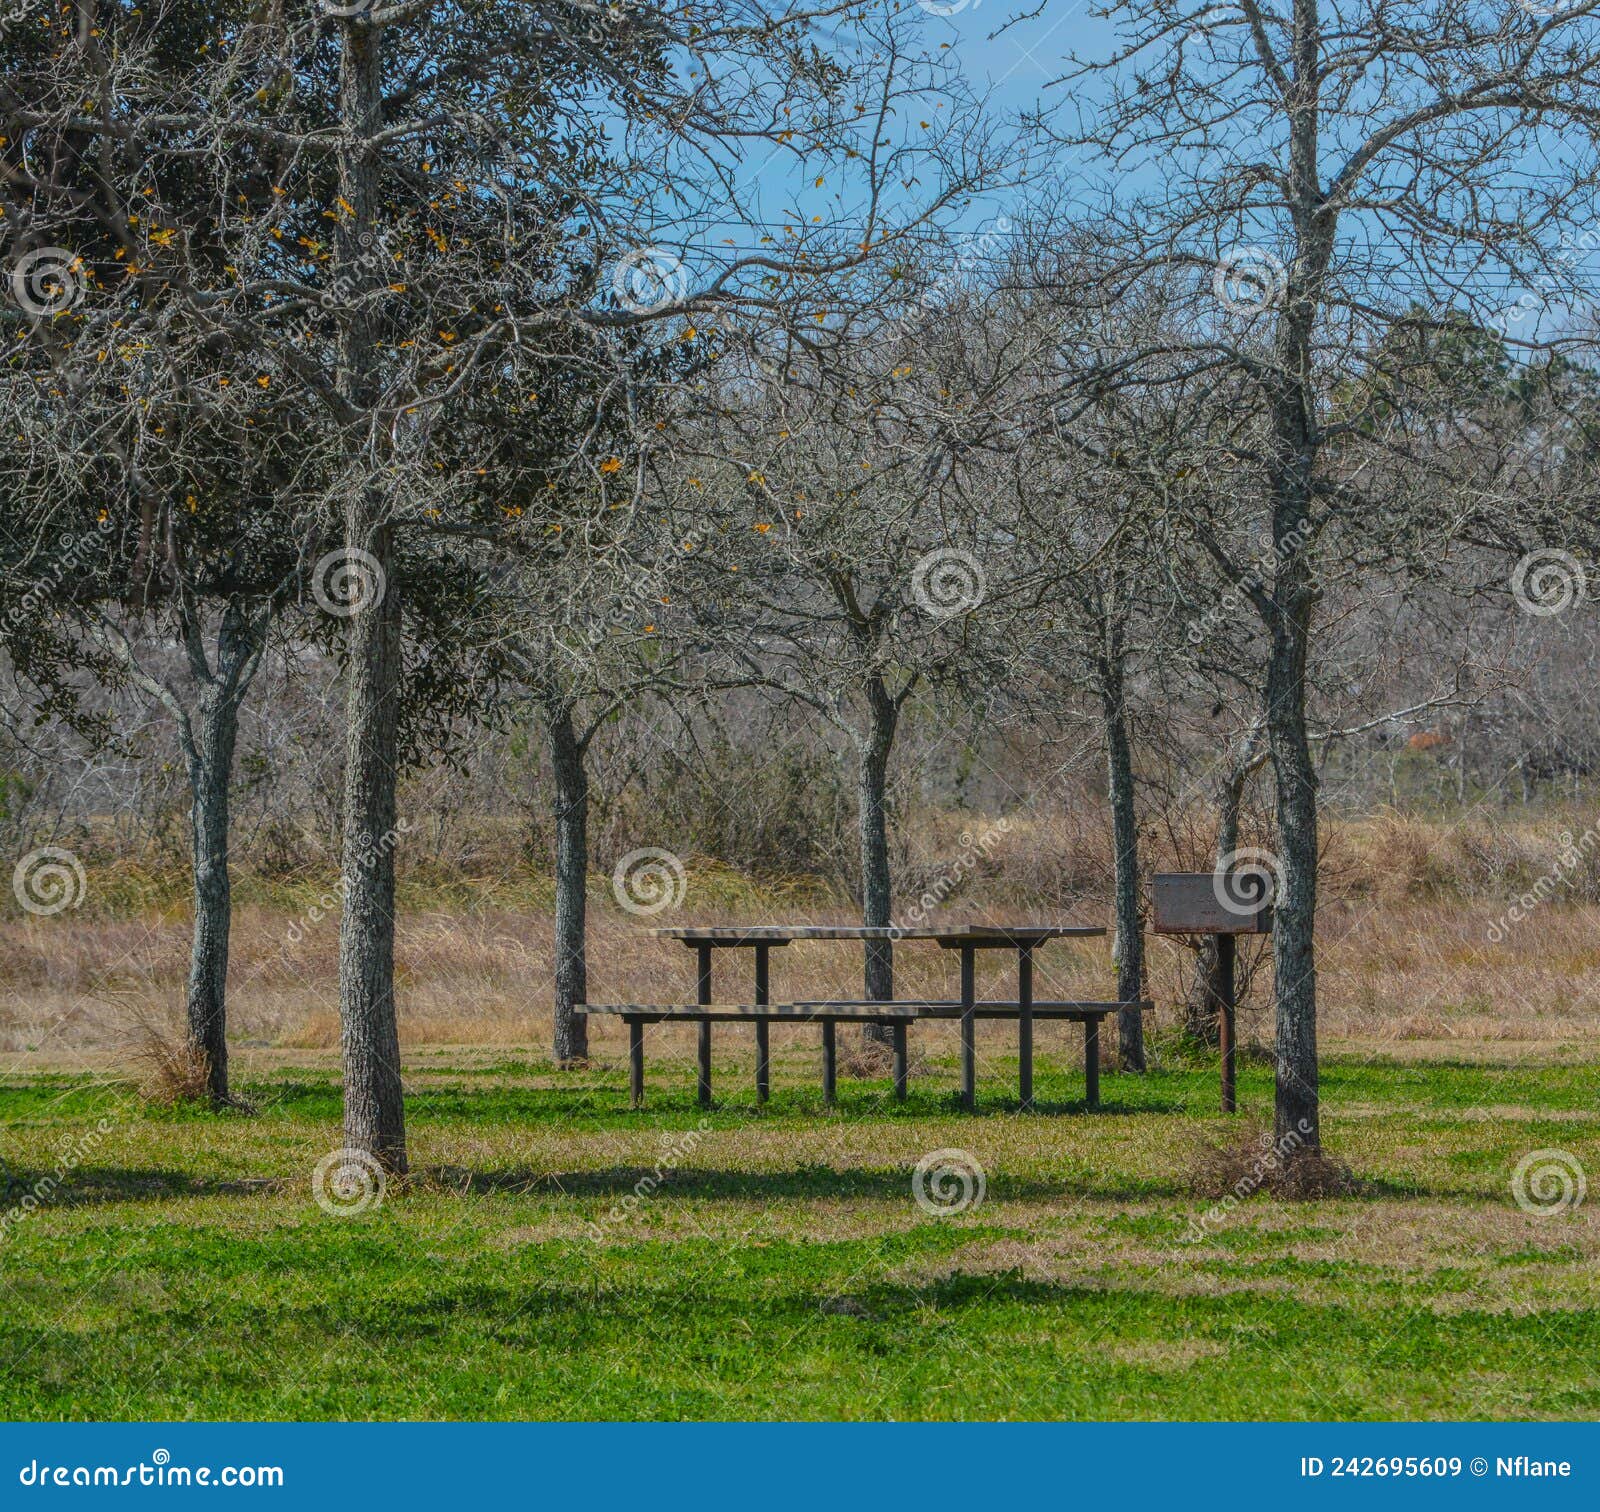 the carl parks picnic area on the tres palacios river in el campo, matagorda county, texas